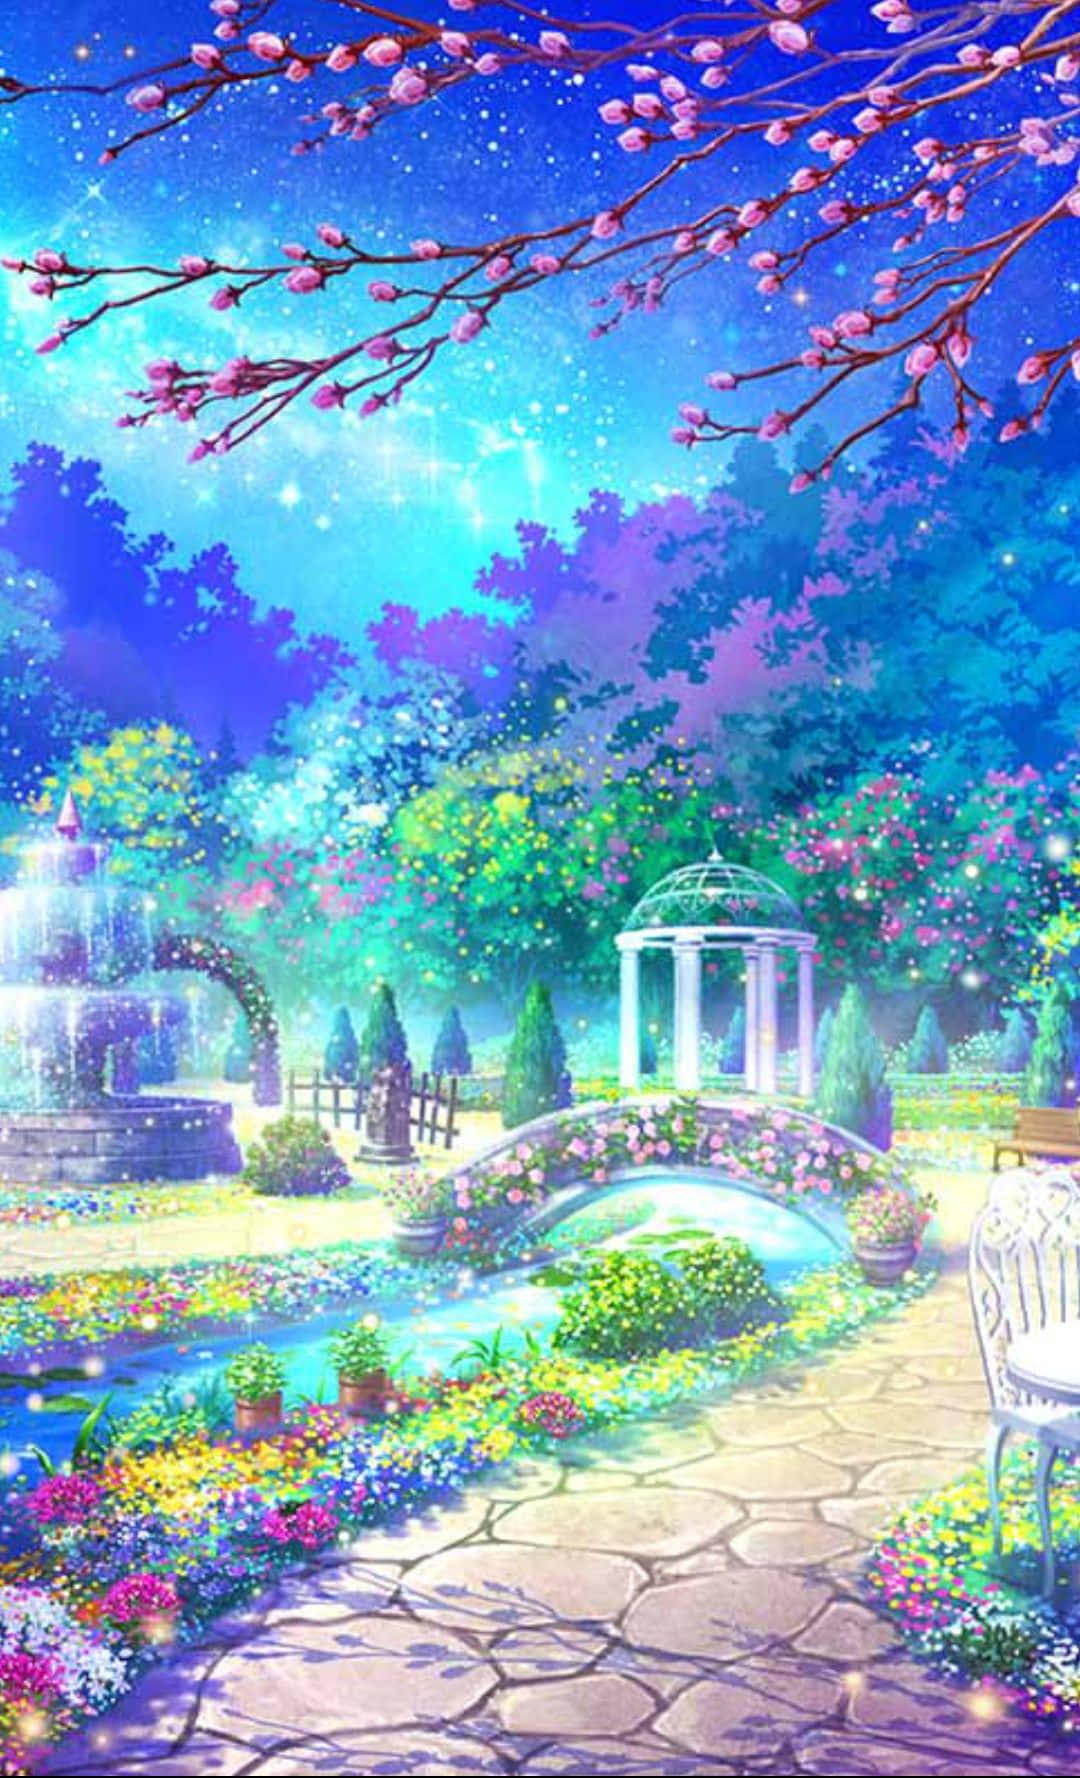 Bibliophile Princess Shōjo Fantasy Romance Novels Get TV Anime in 2022 -  News - Anime News Network